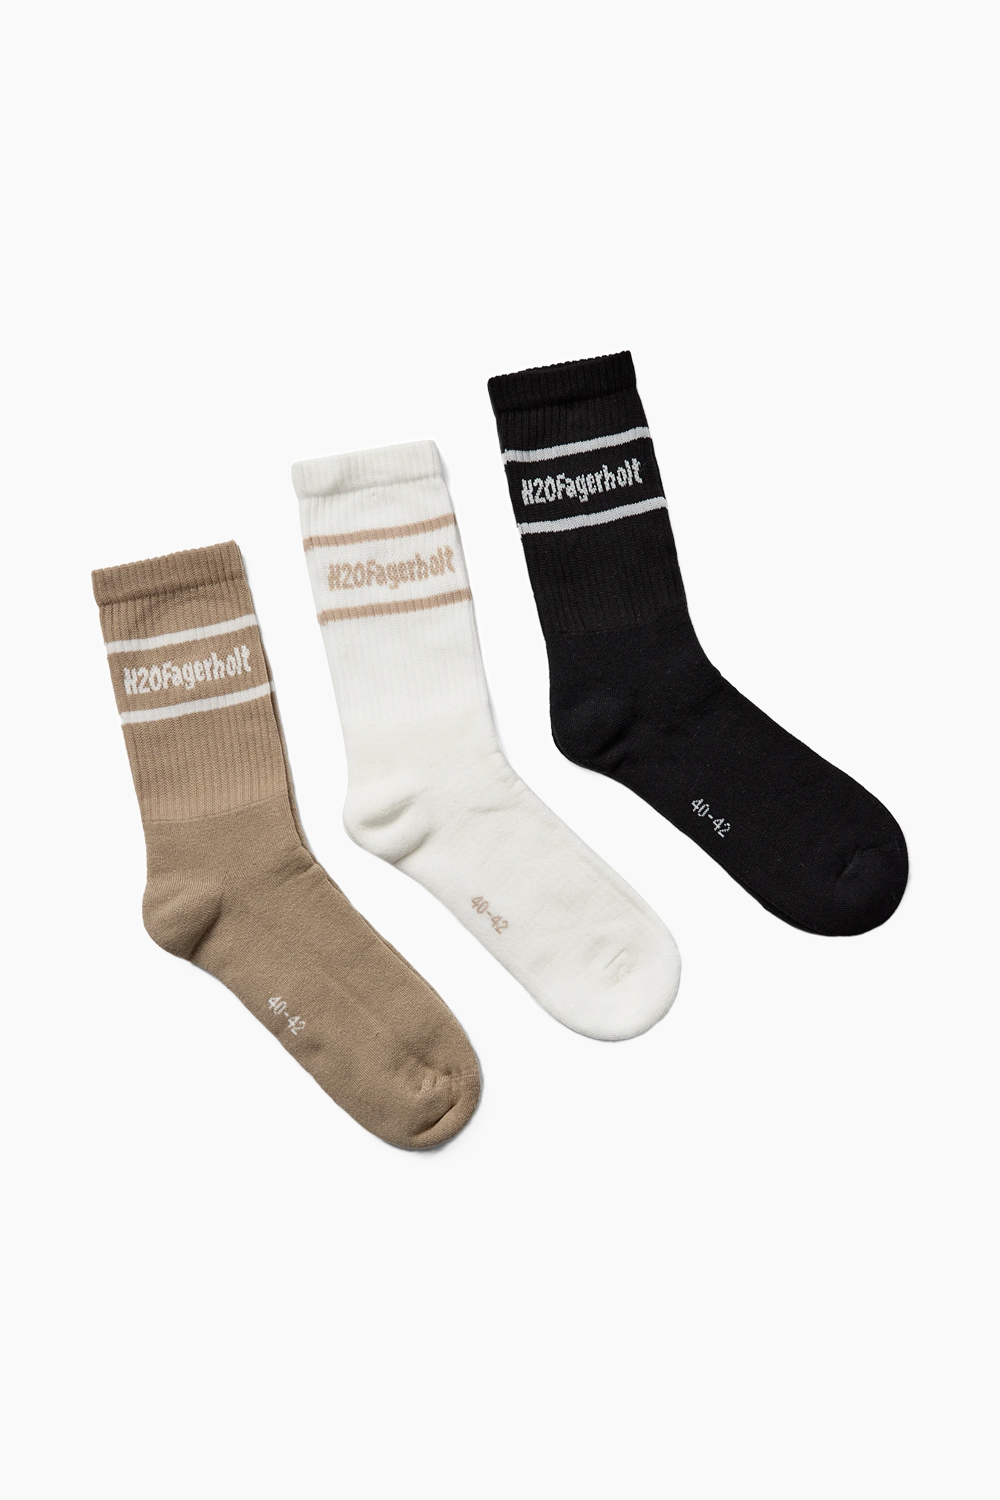 Se New Suck Socks - Black/White/Creamy Grey - H2O Fagerholt - Mønstret 40-42 hos QNTS.dk